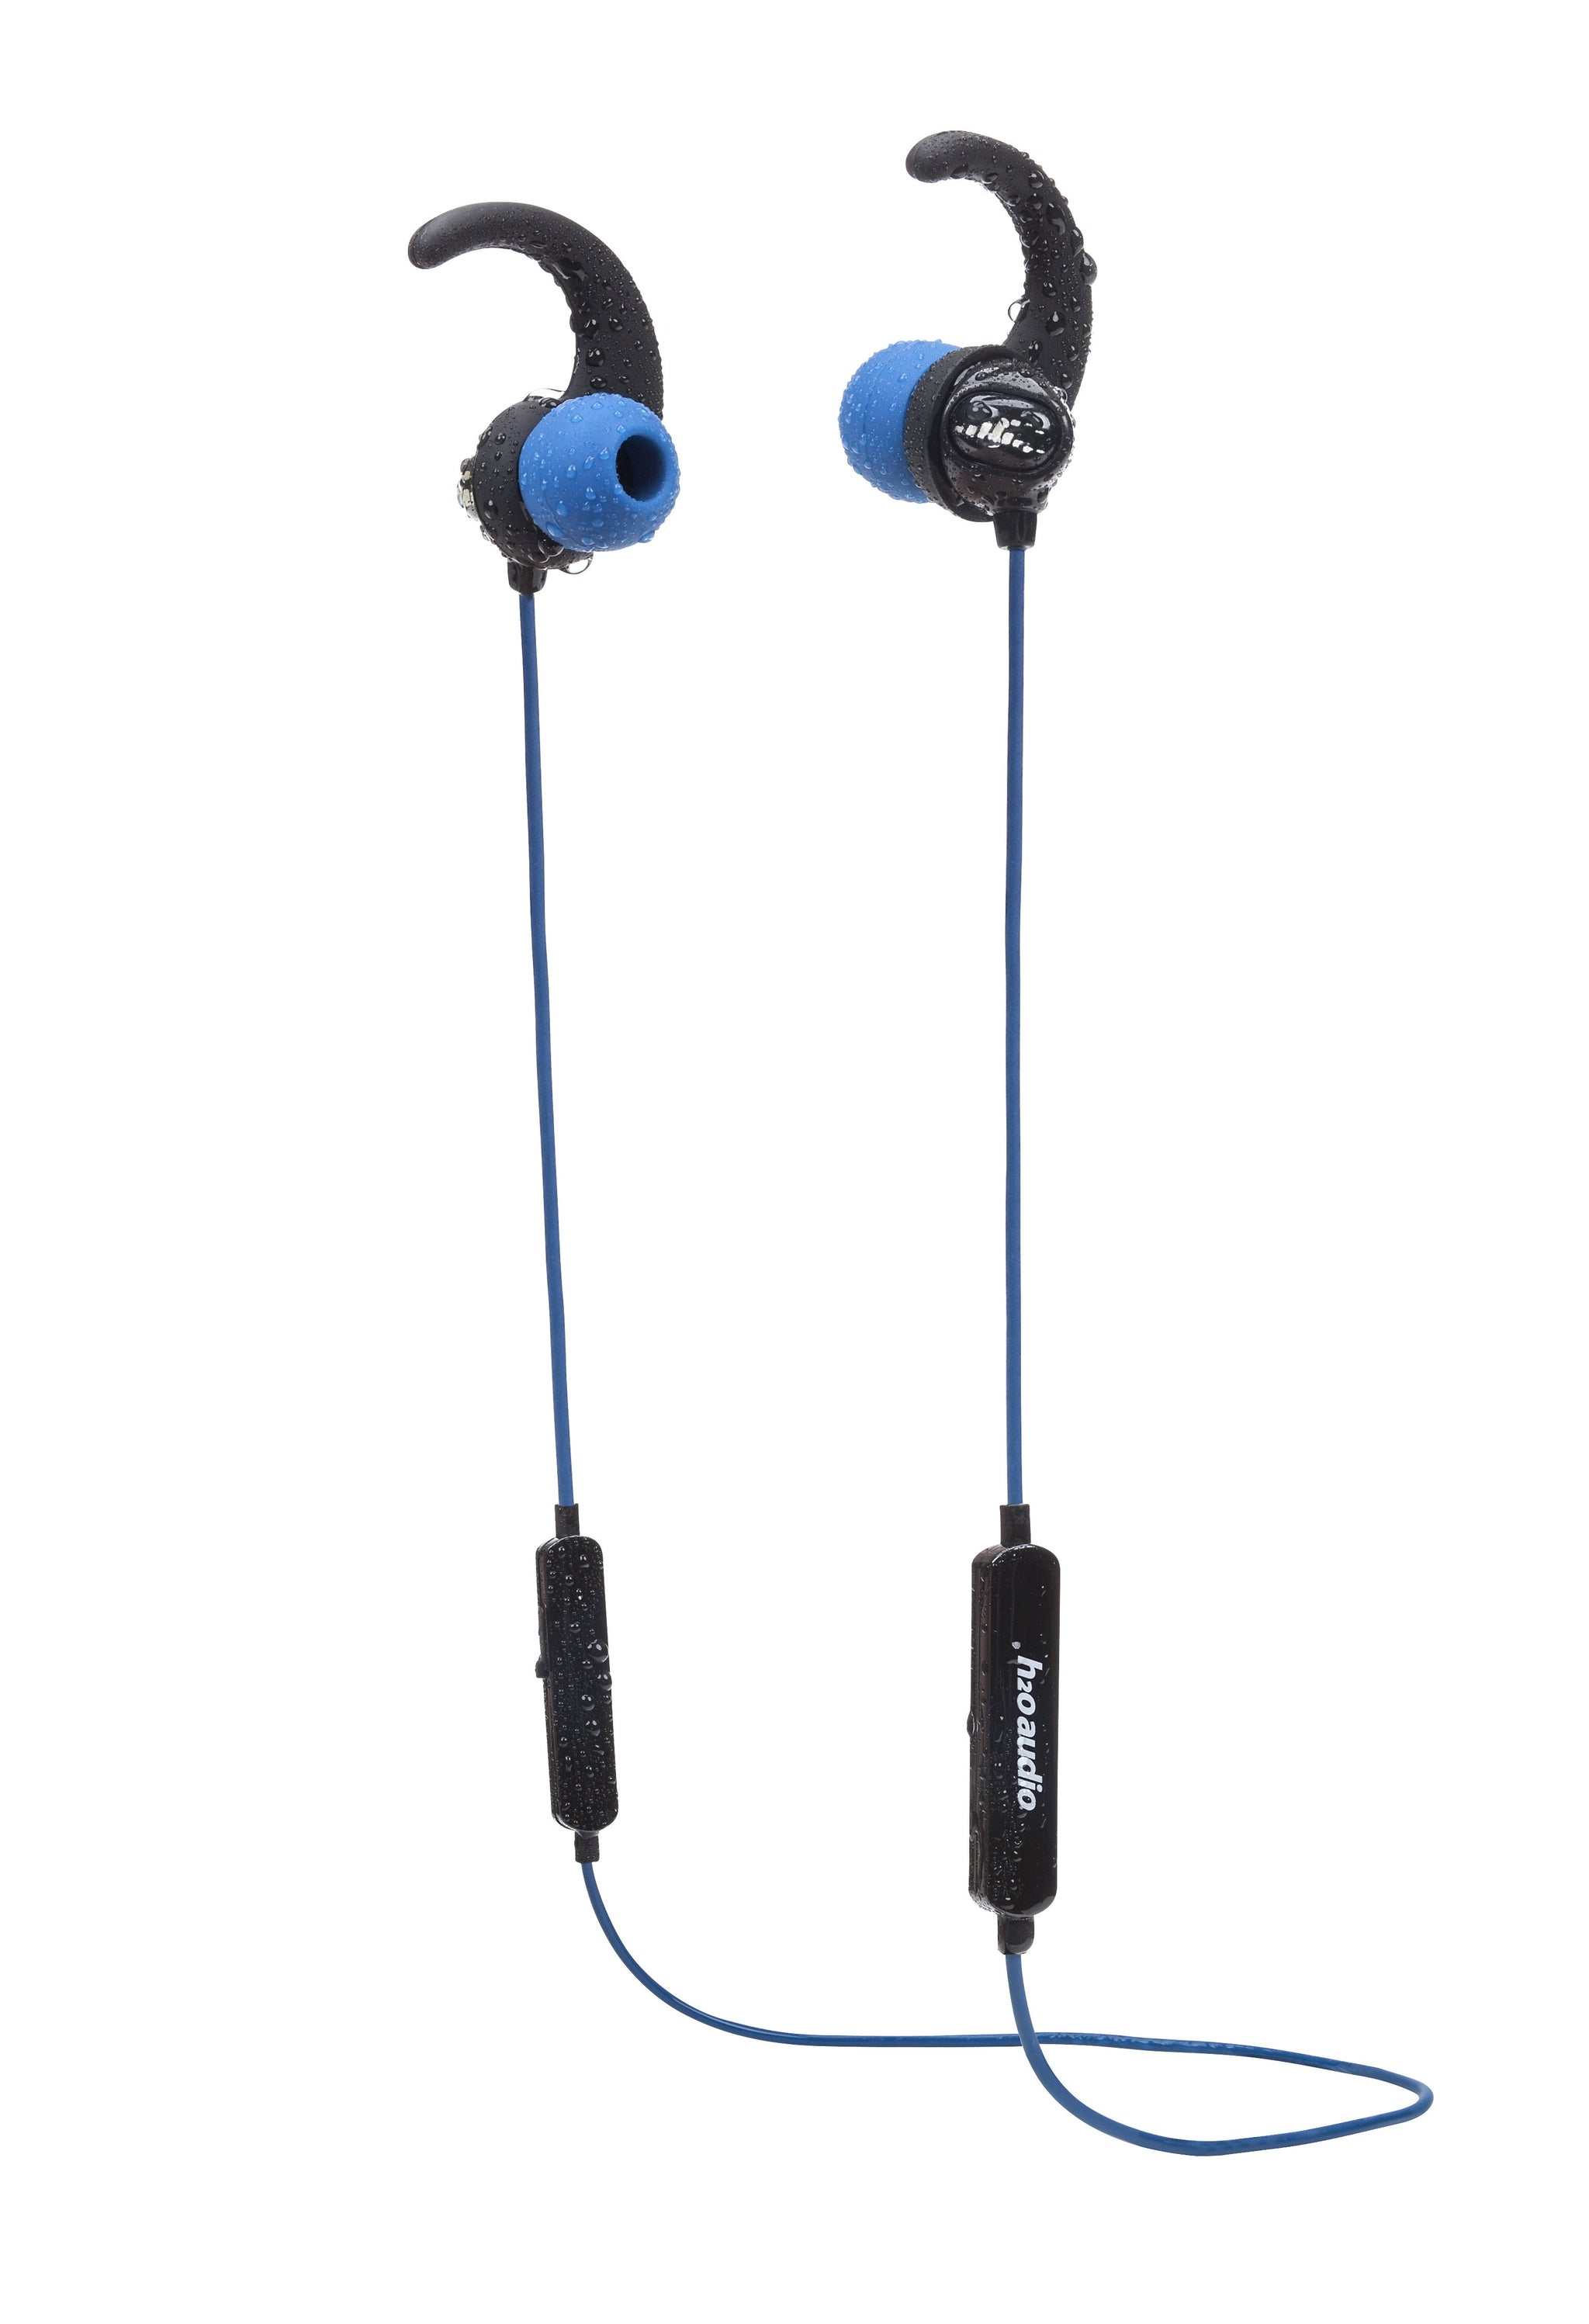 Наушники для стрима. Наушники h2o Audio Surge s+ Waterproof Sport Headphones. Блютуз наушники h610. Miami наушники h20. Lenovo наушники h202.